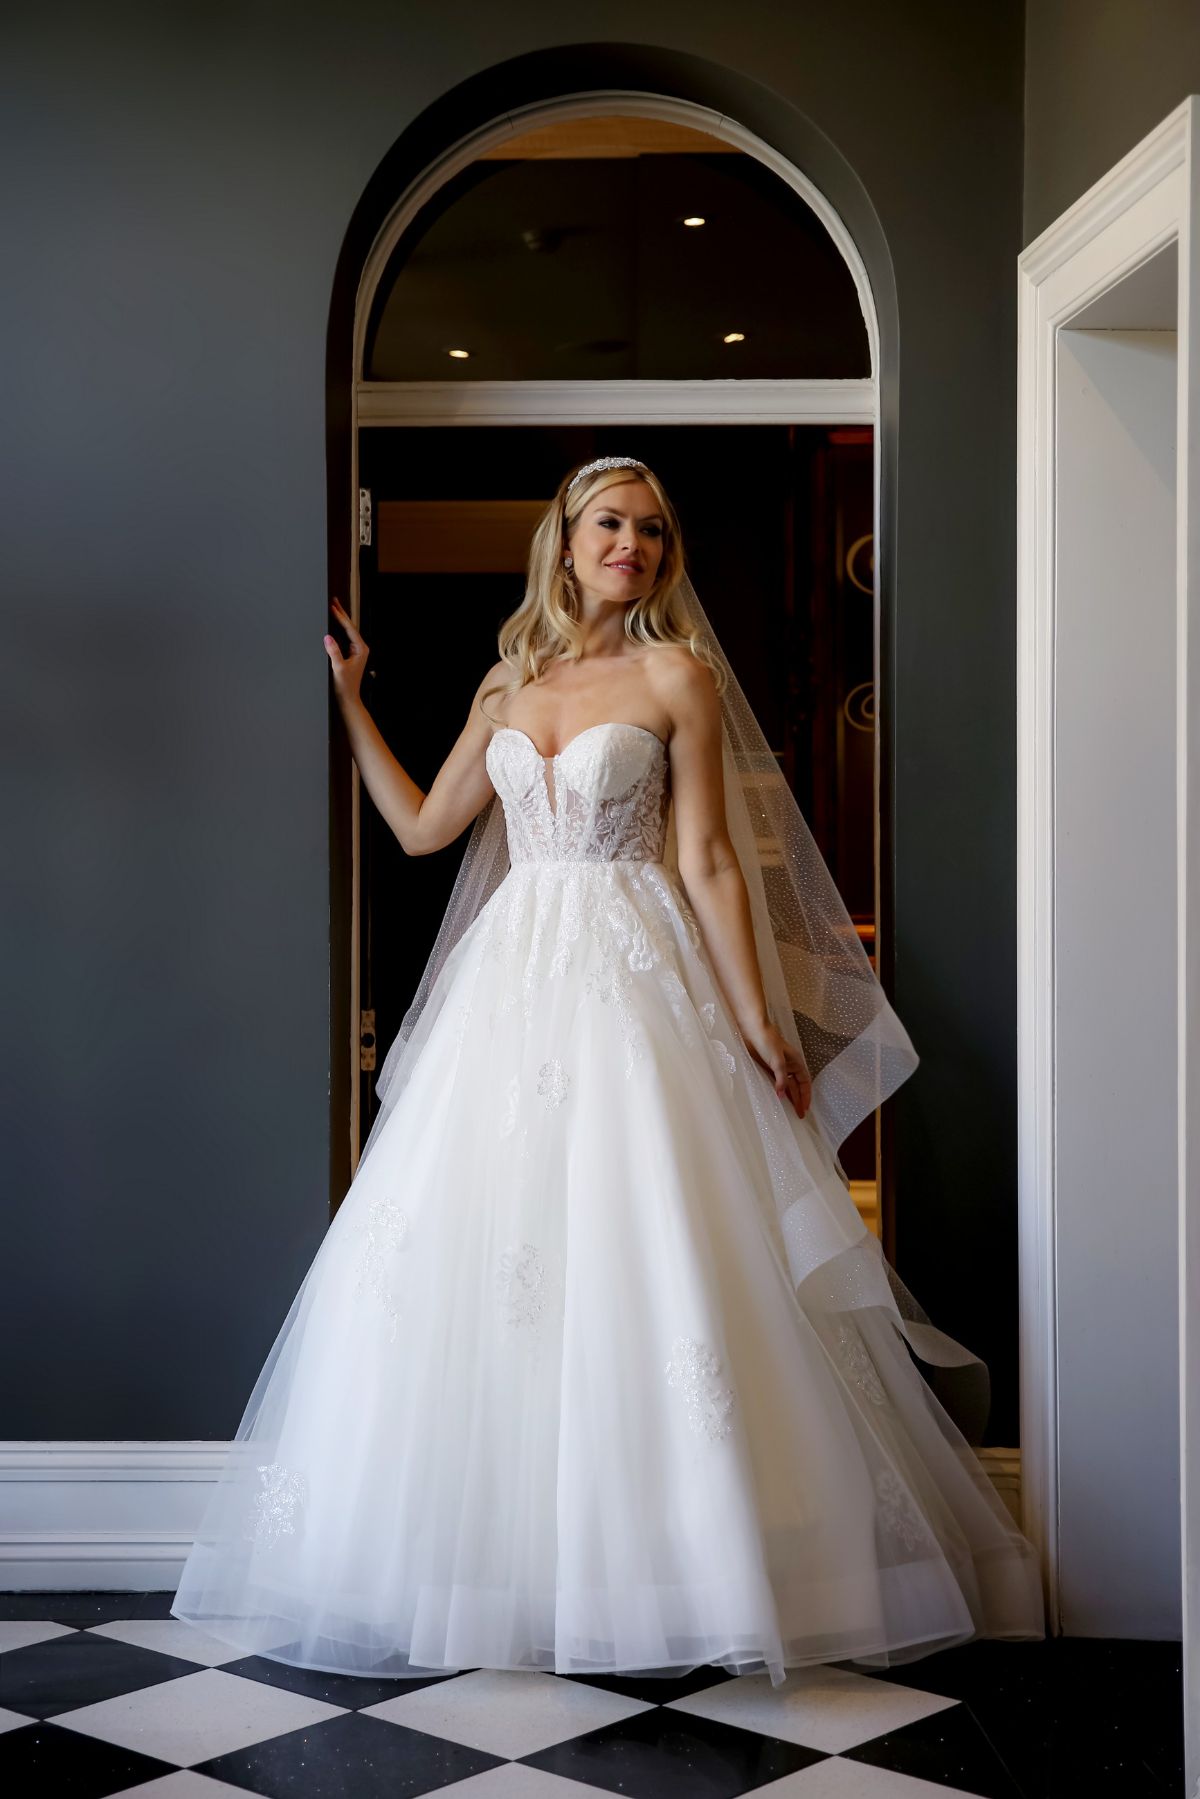 Best Dress 2 Impress Bridal-Image-62